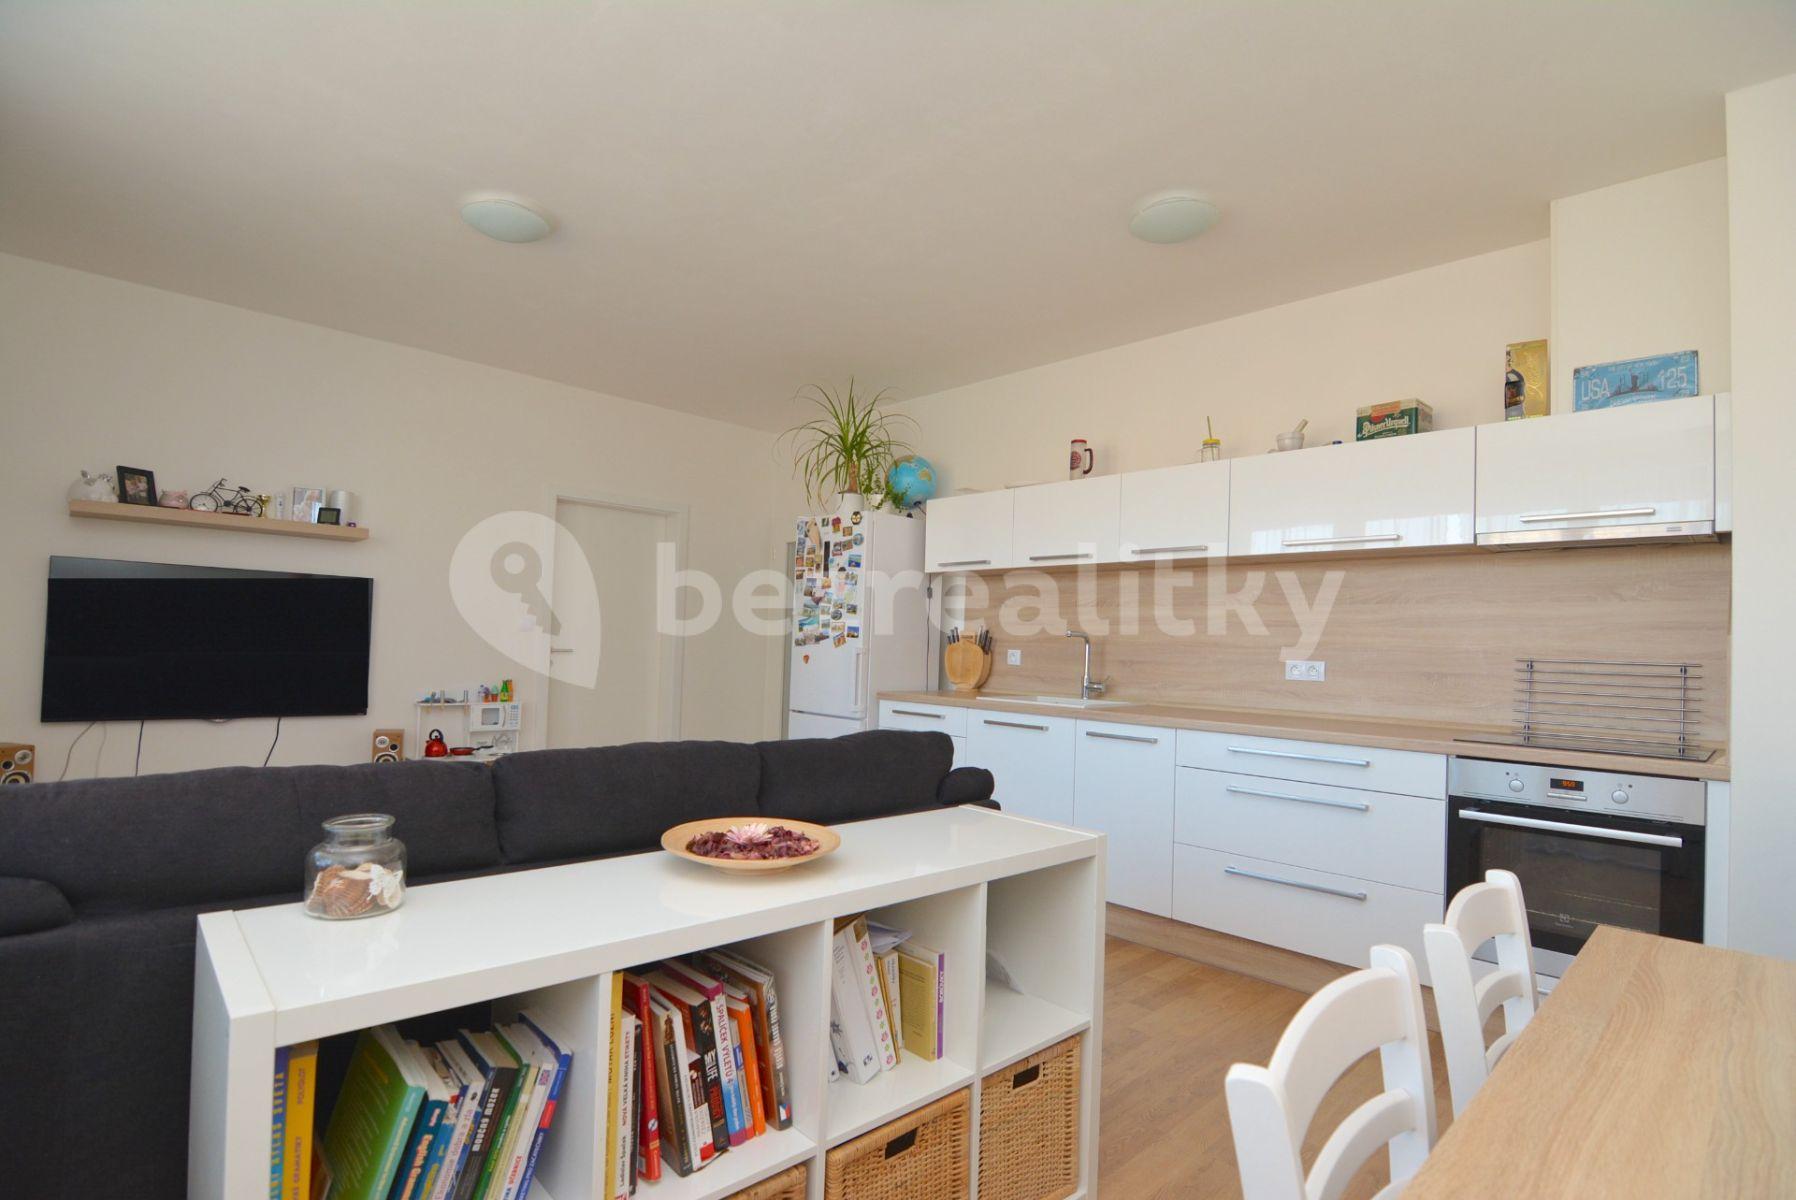 1 bedroom with open-plan kitchen flat to rent, 58 m², Modenská, Prague, Prague